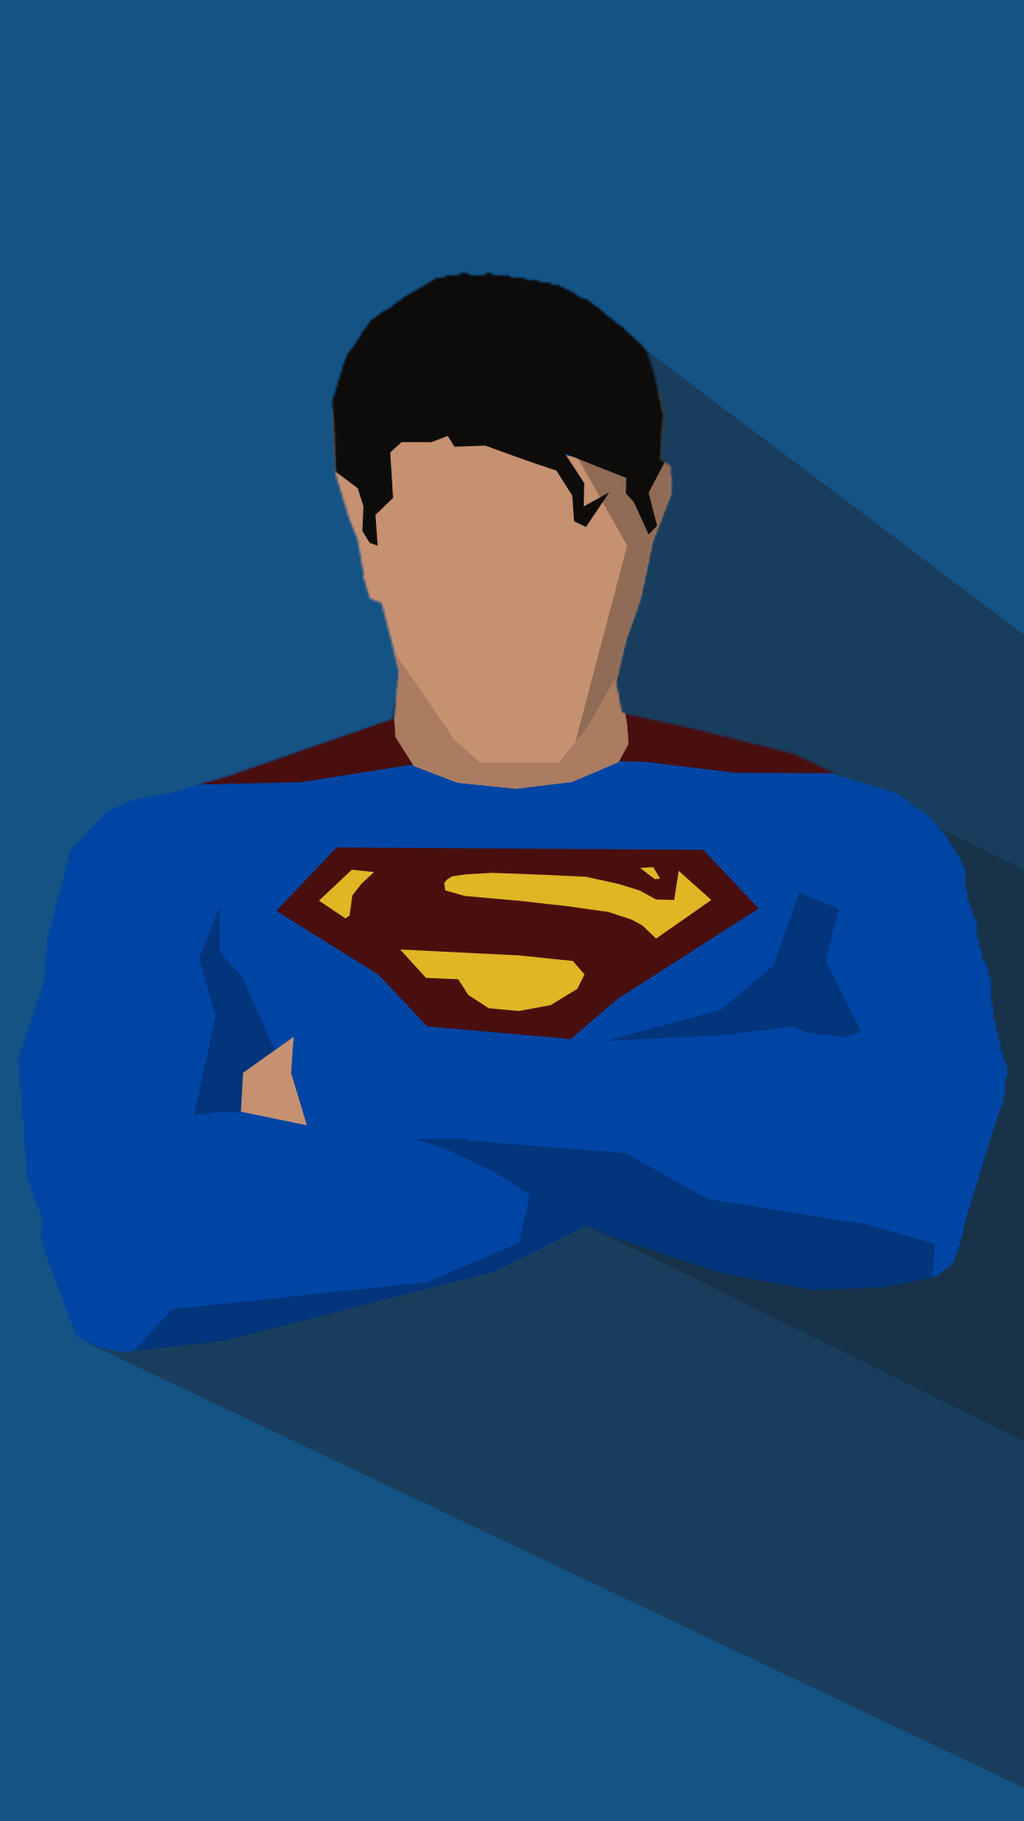 Brandon Routh Superman Wallpaper by Spider-maguire on DeviantArt